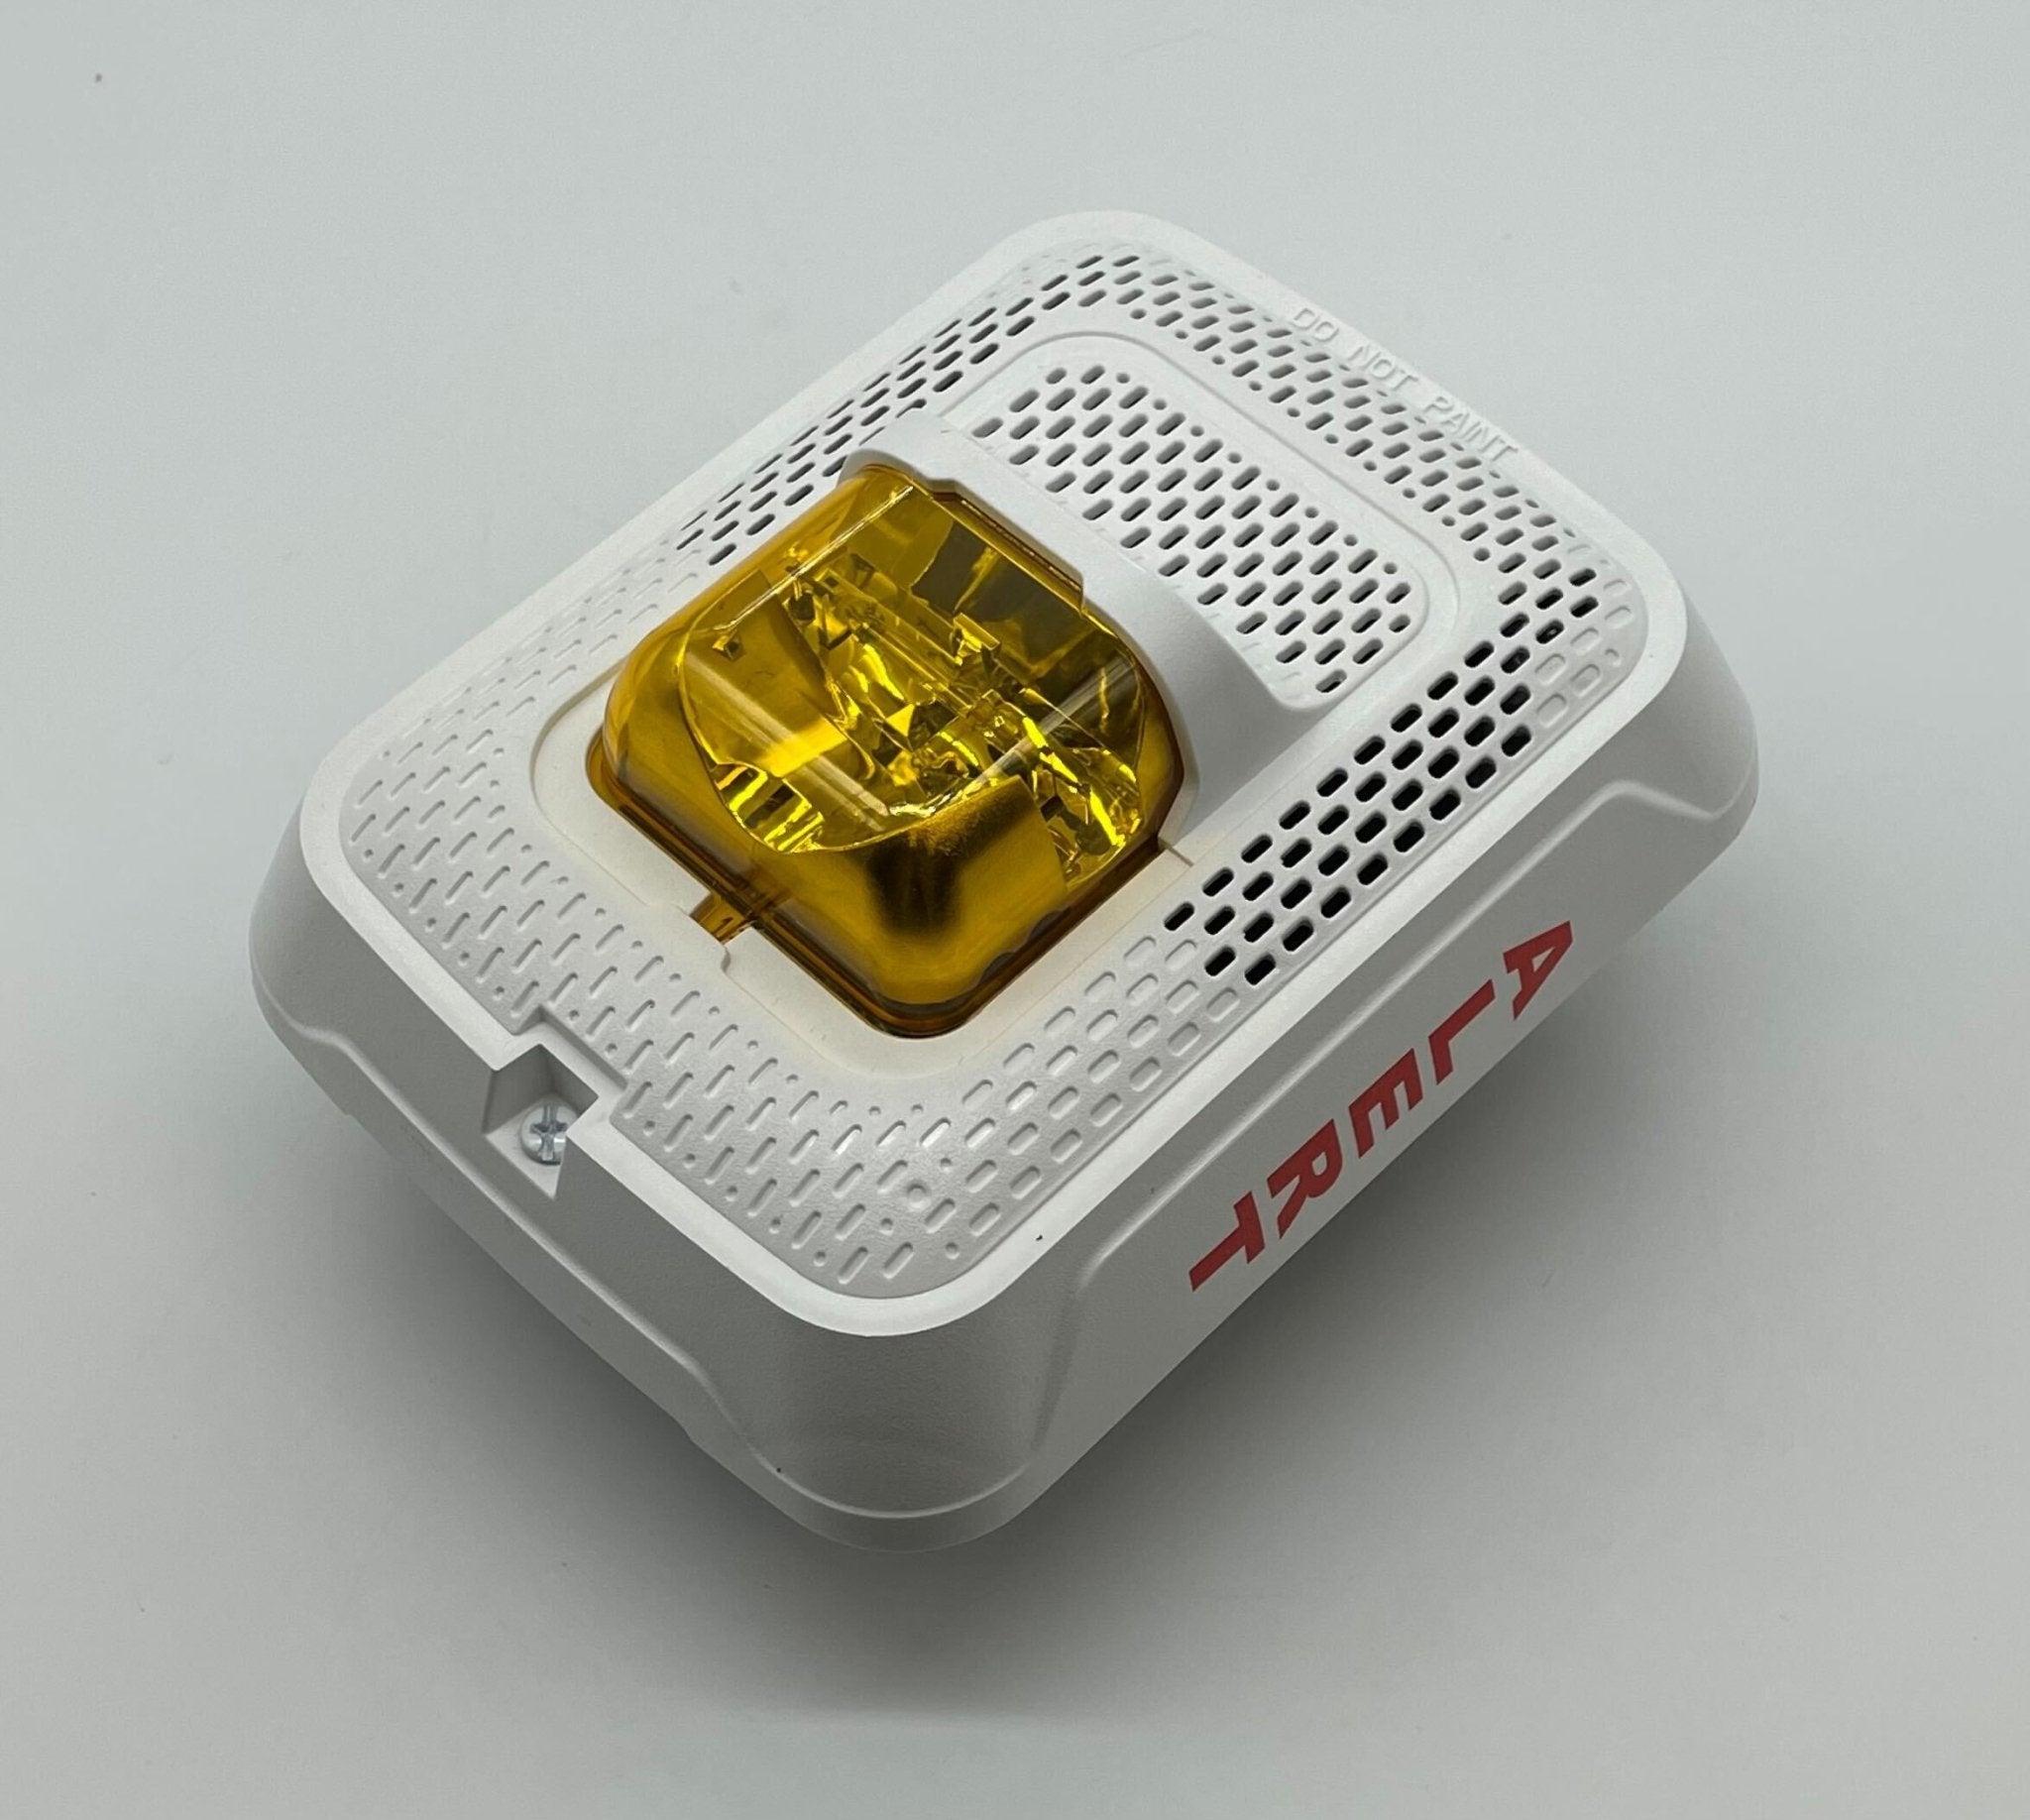 System Sensor SPSWL-ALERT - The Fire Alarm Supplier